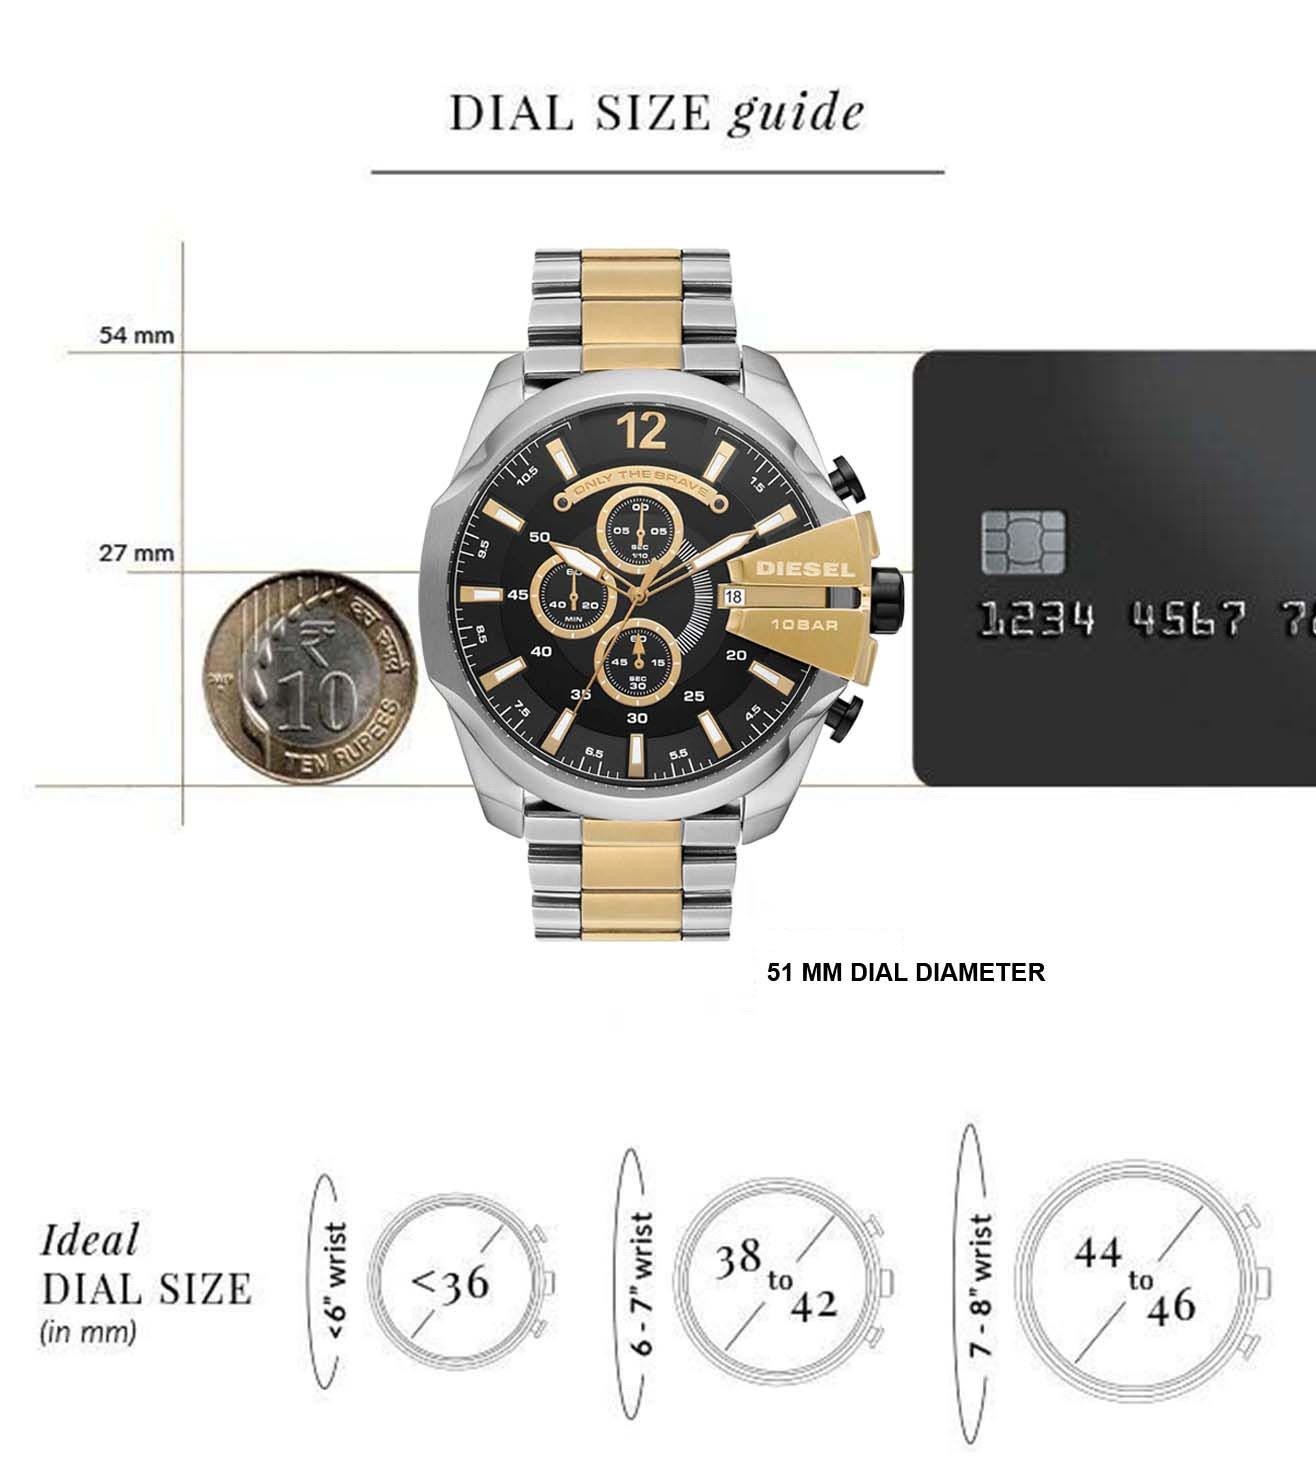 DZ4581 | DIESEL Mega Chief Chronograph Watch for Men